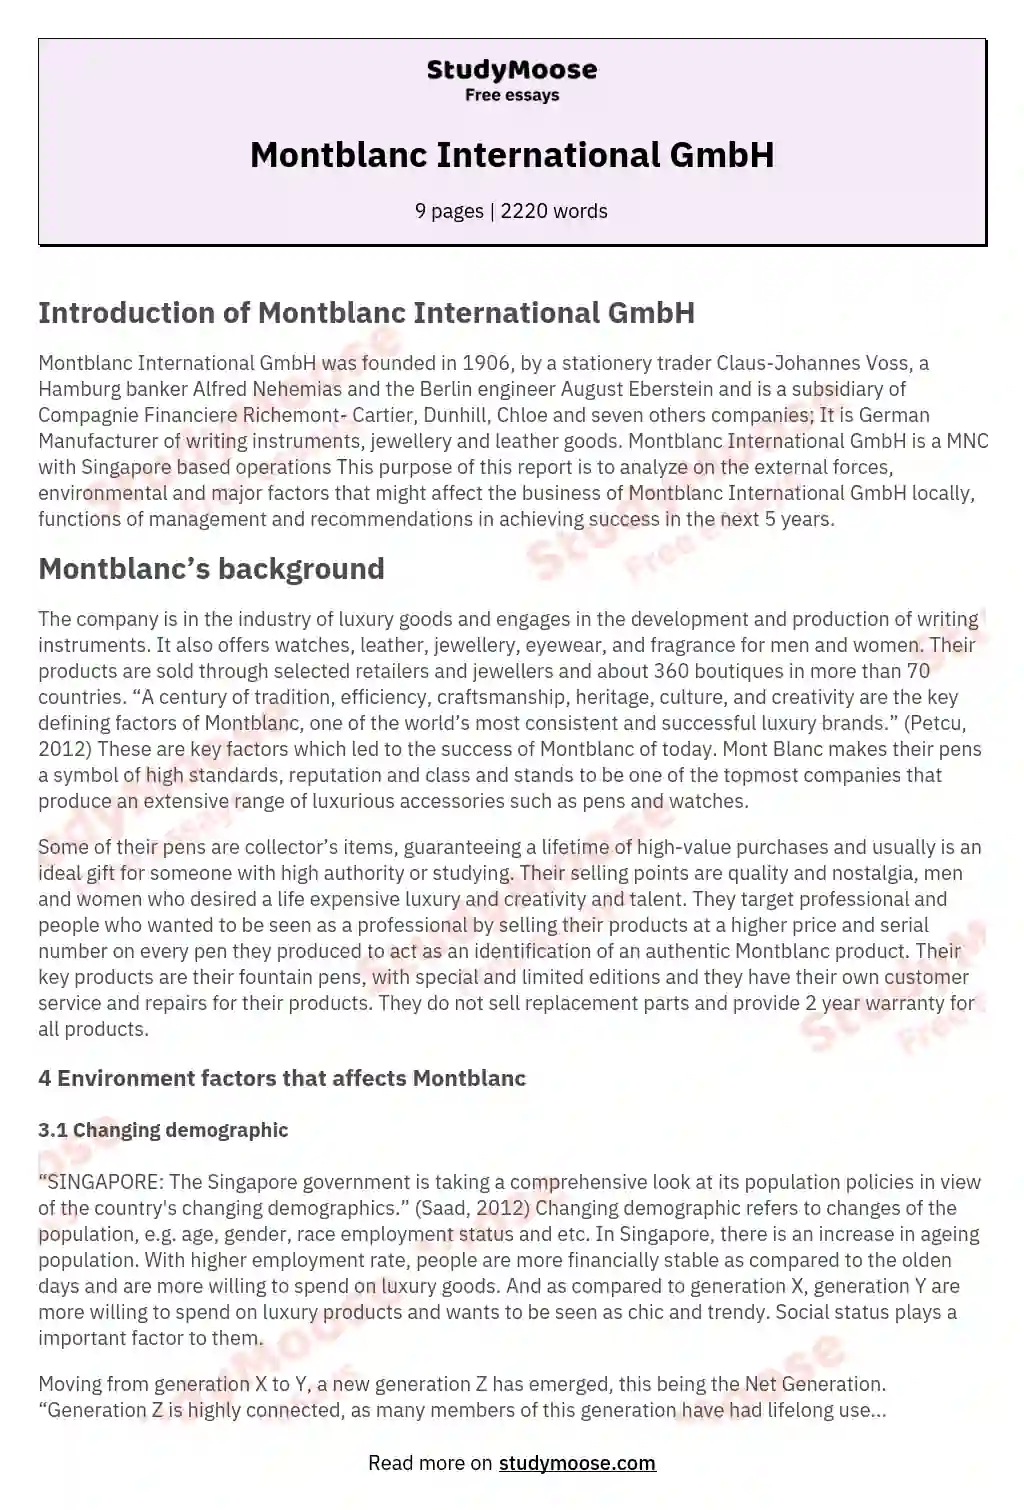 Montblanc International GmbH essay